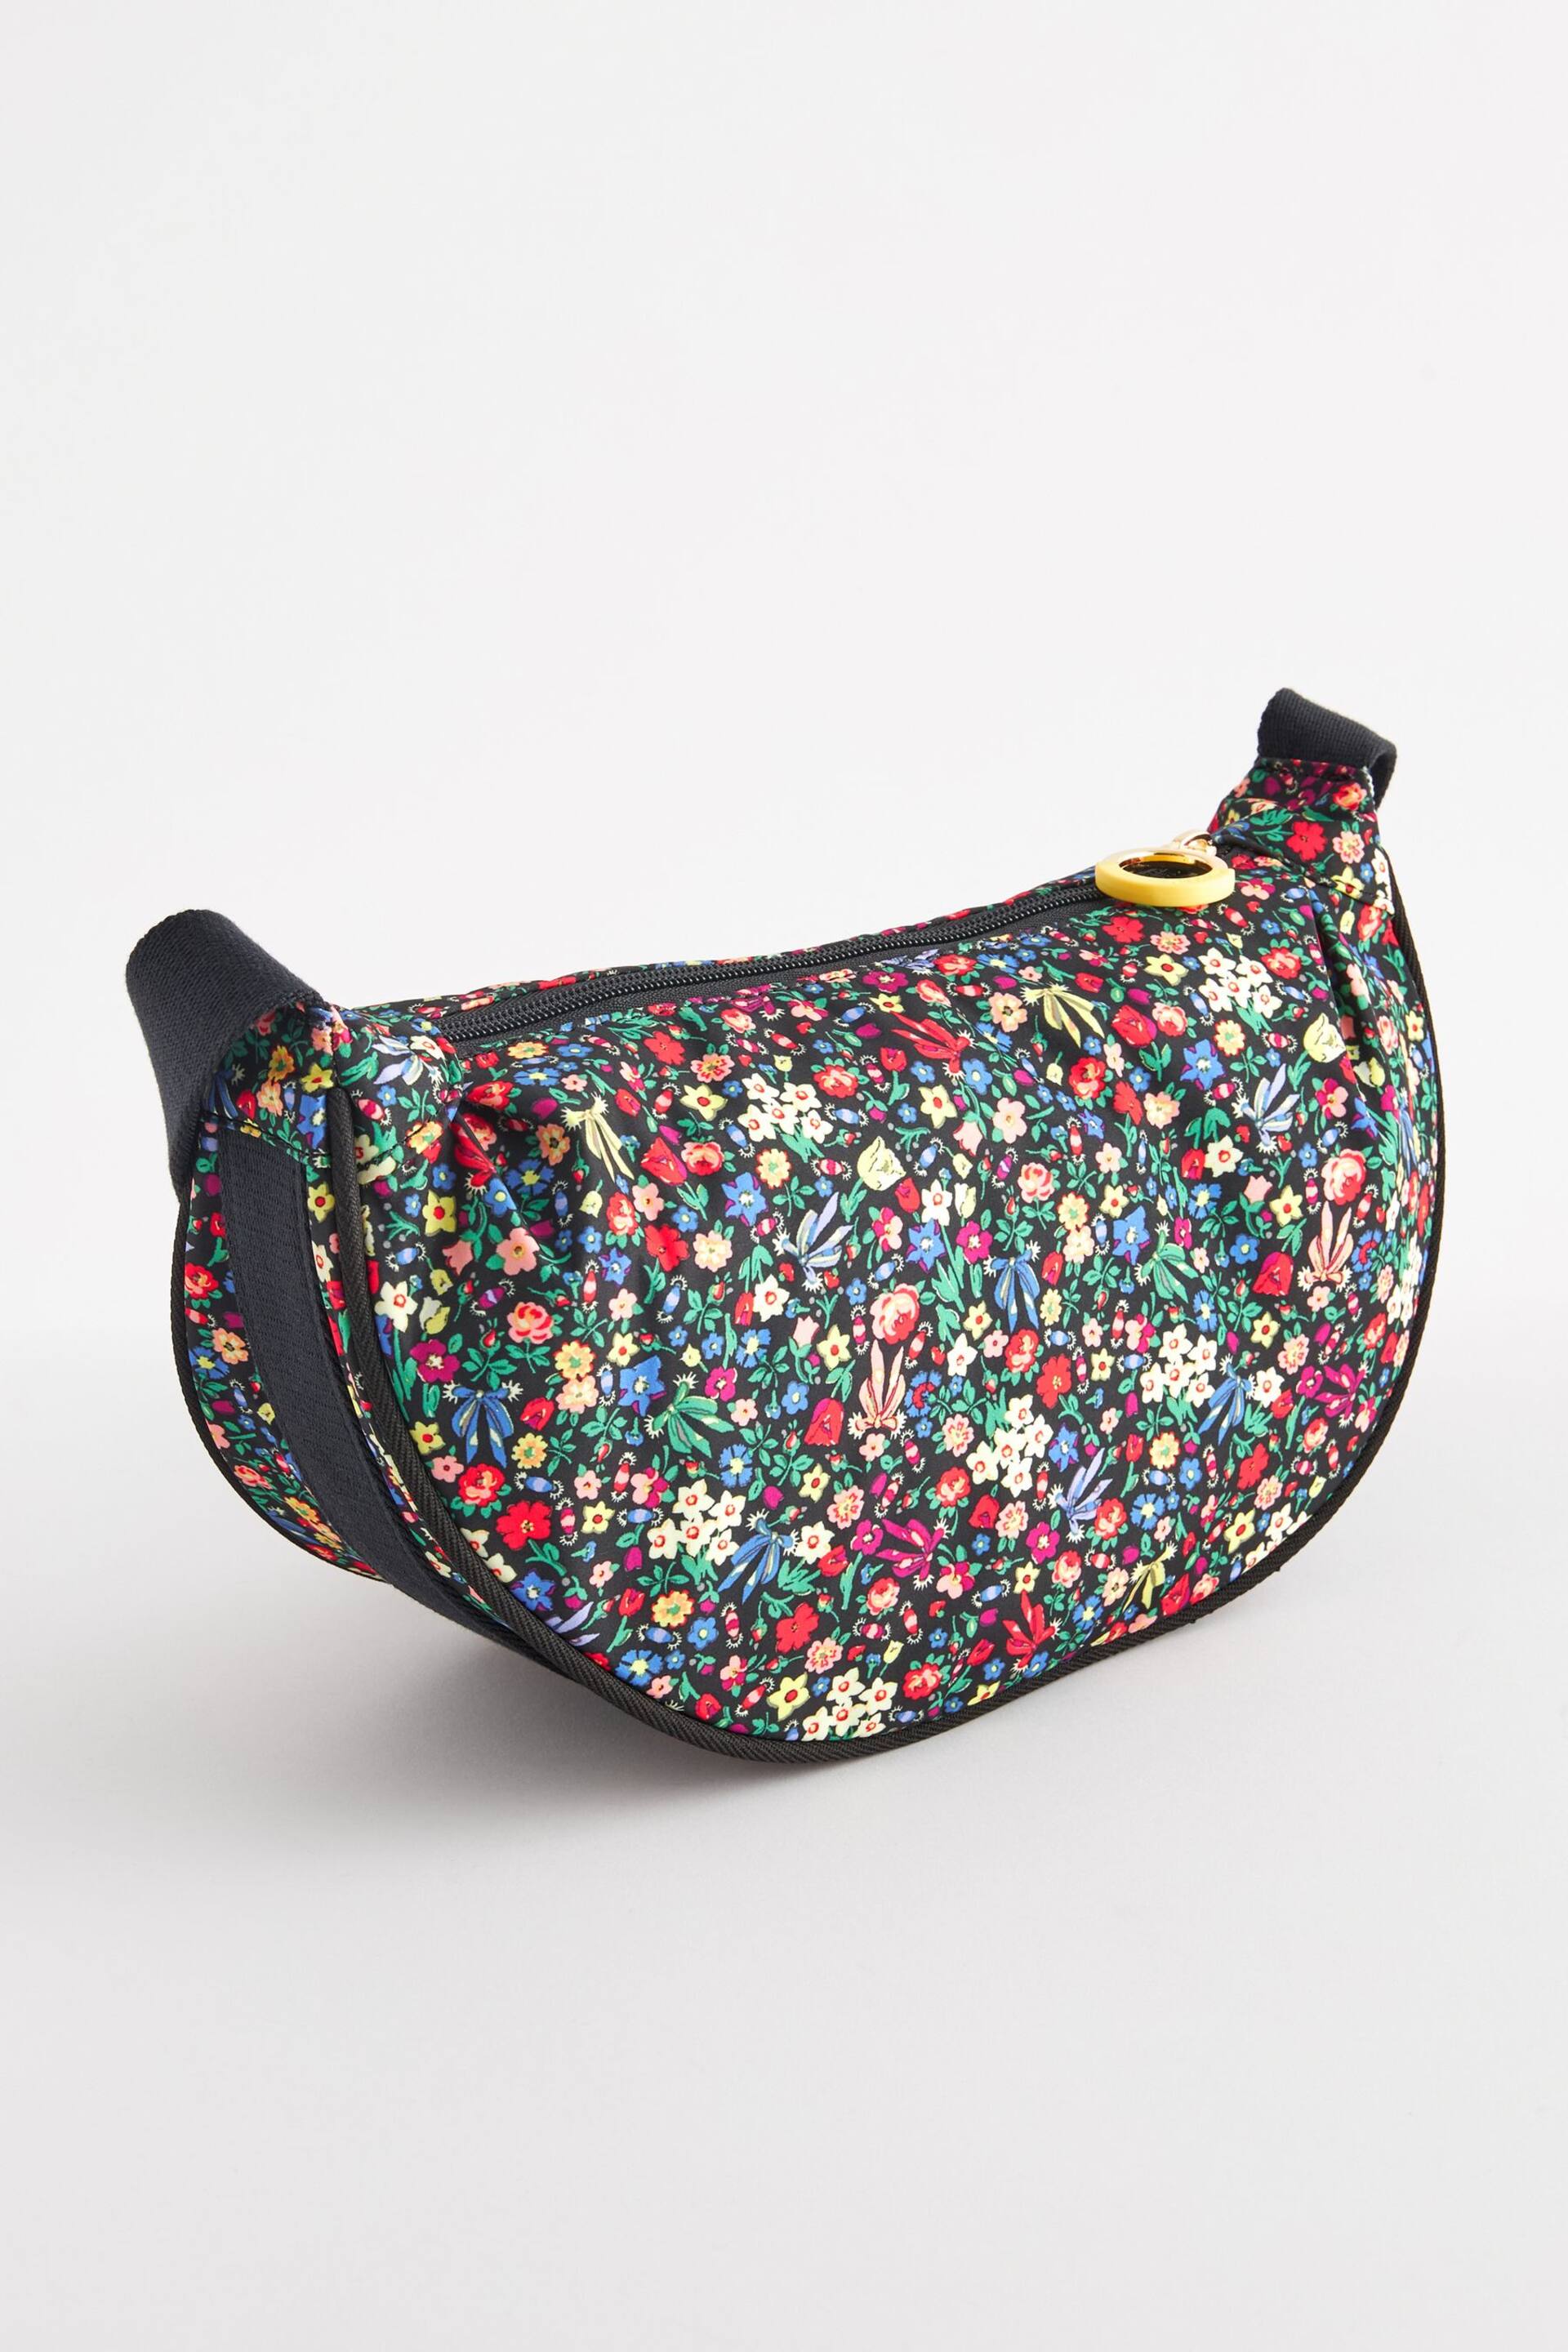 Cath Kidston Black Ditsy Floral Round Mini Shoulder Bag - Image 2 of 6